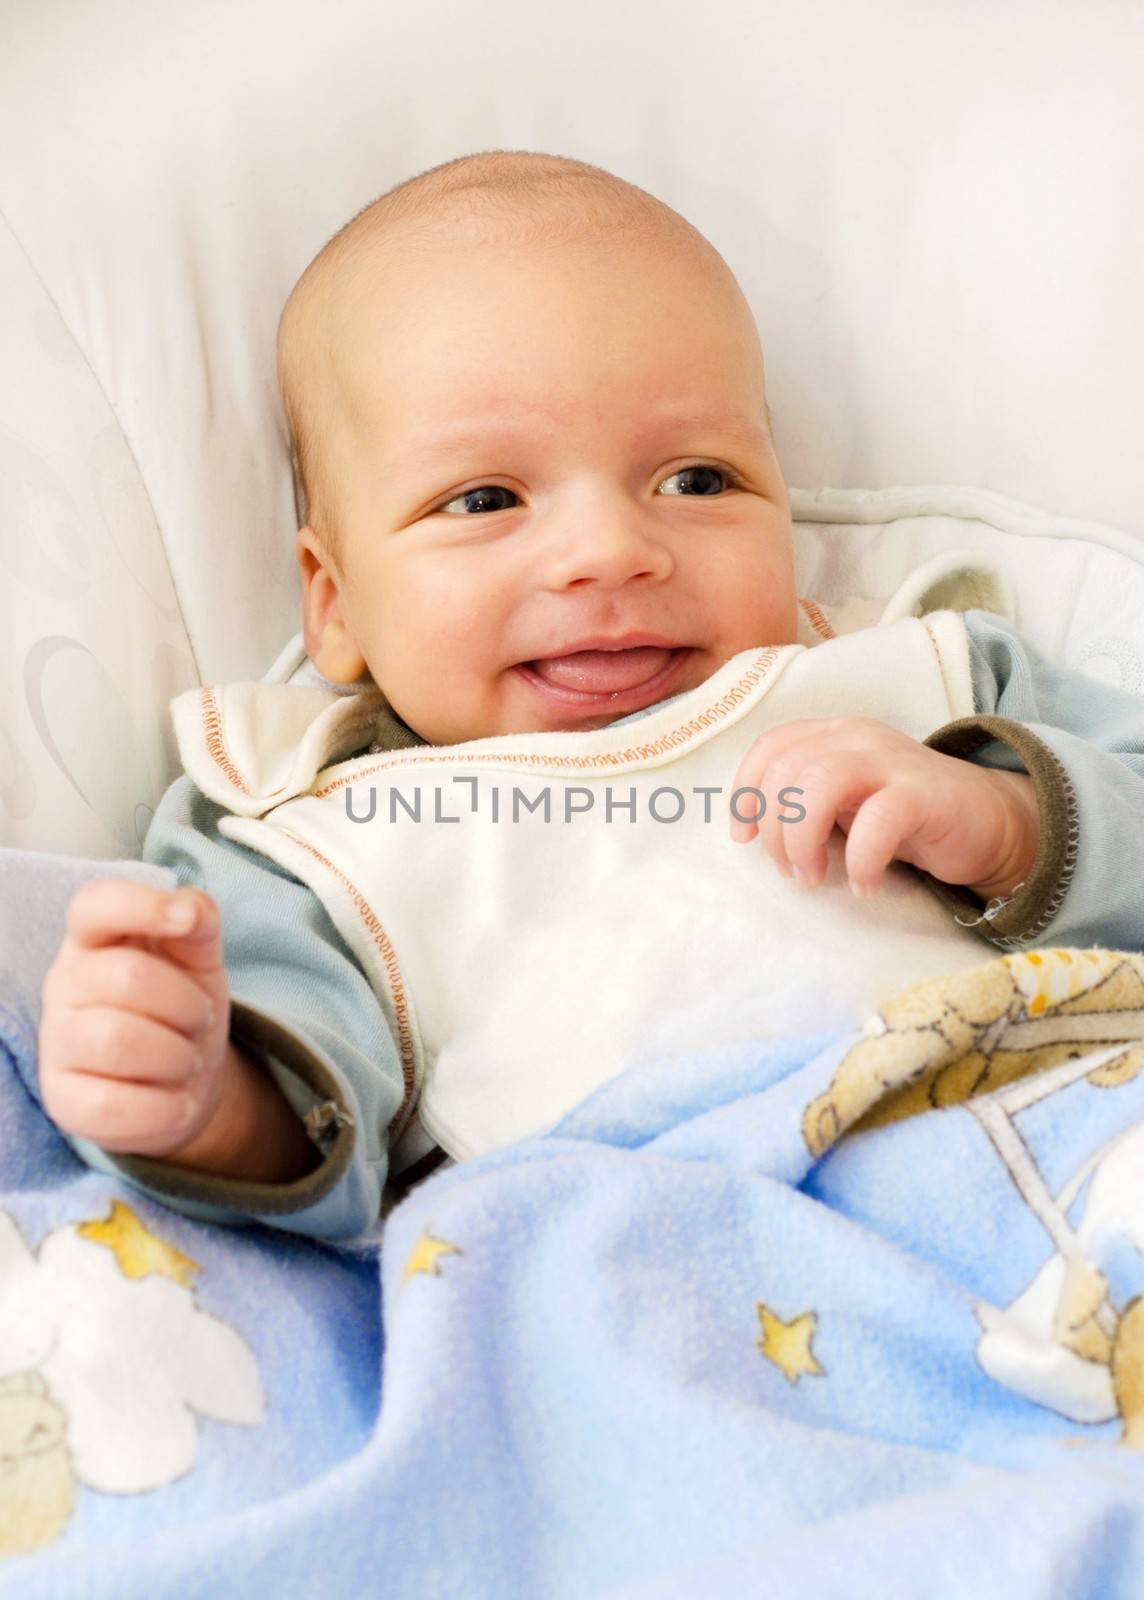 Newborn baby boy smiling by simpson33